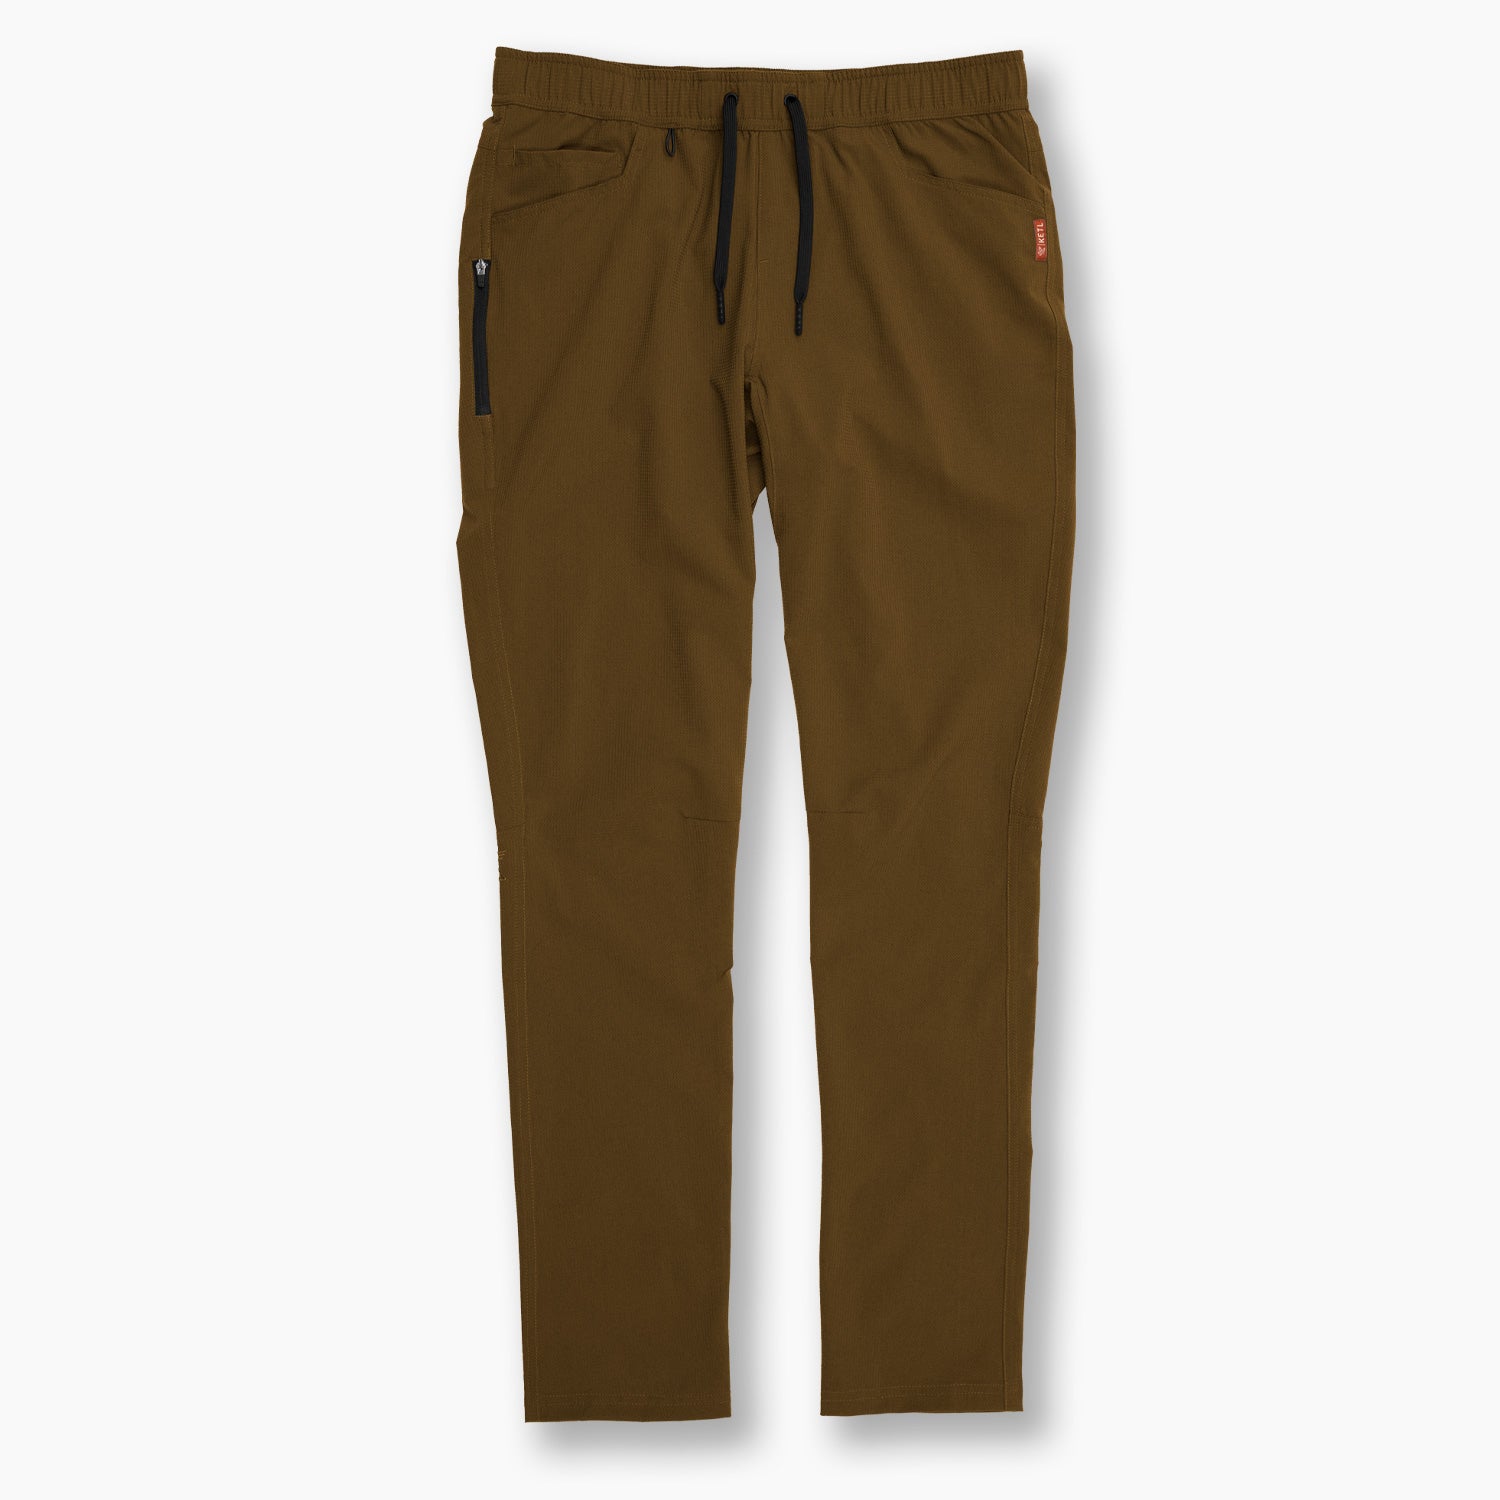 KETL Mtn. Apparel Summer Hiking Pants - Men's Breathable Stretch Pants, Brown / XXXL (39-41) / 34